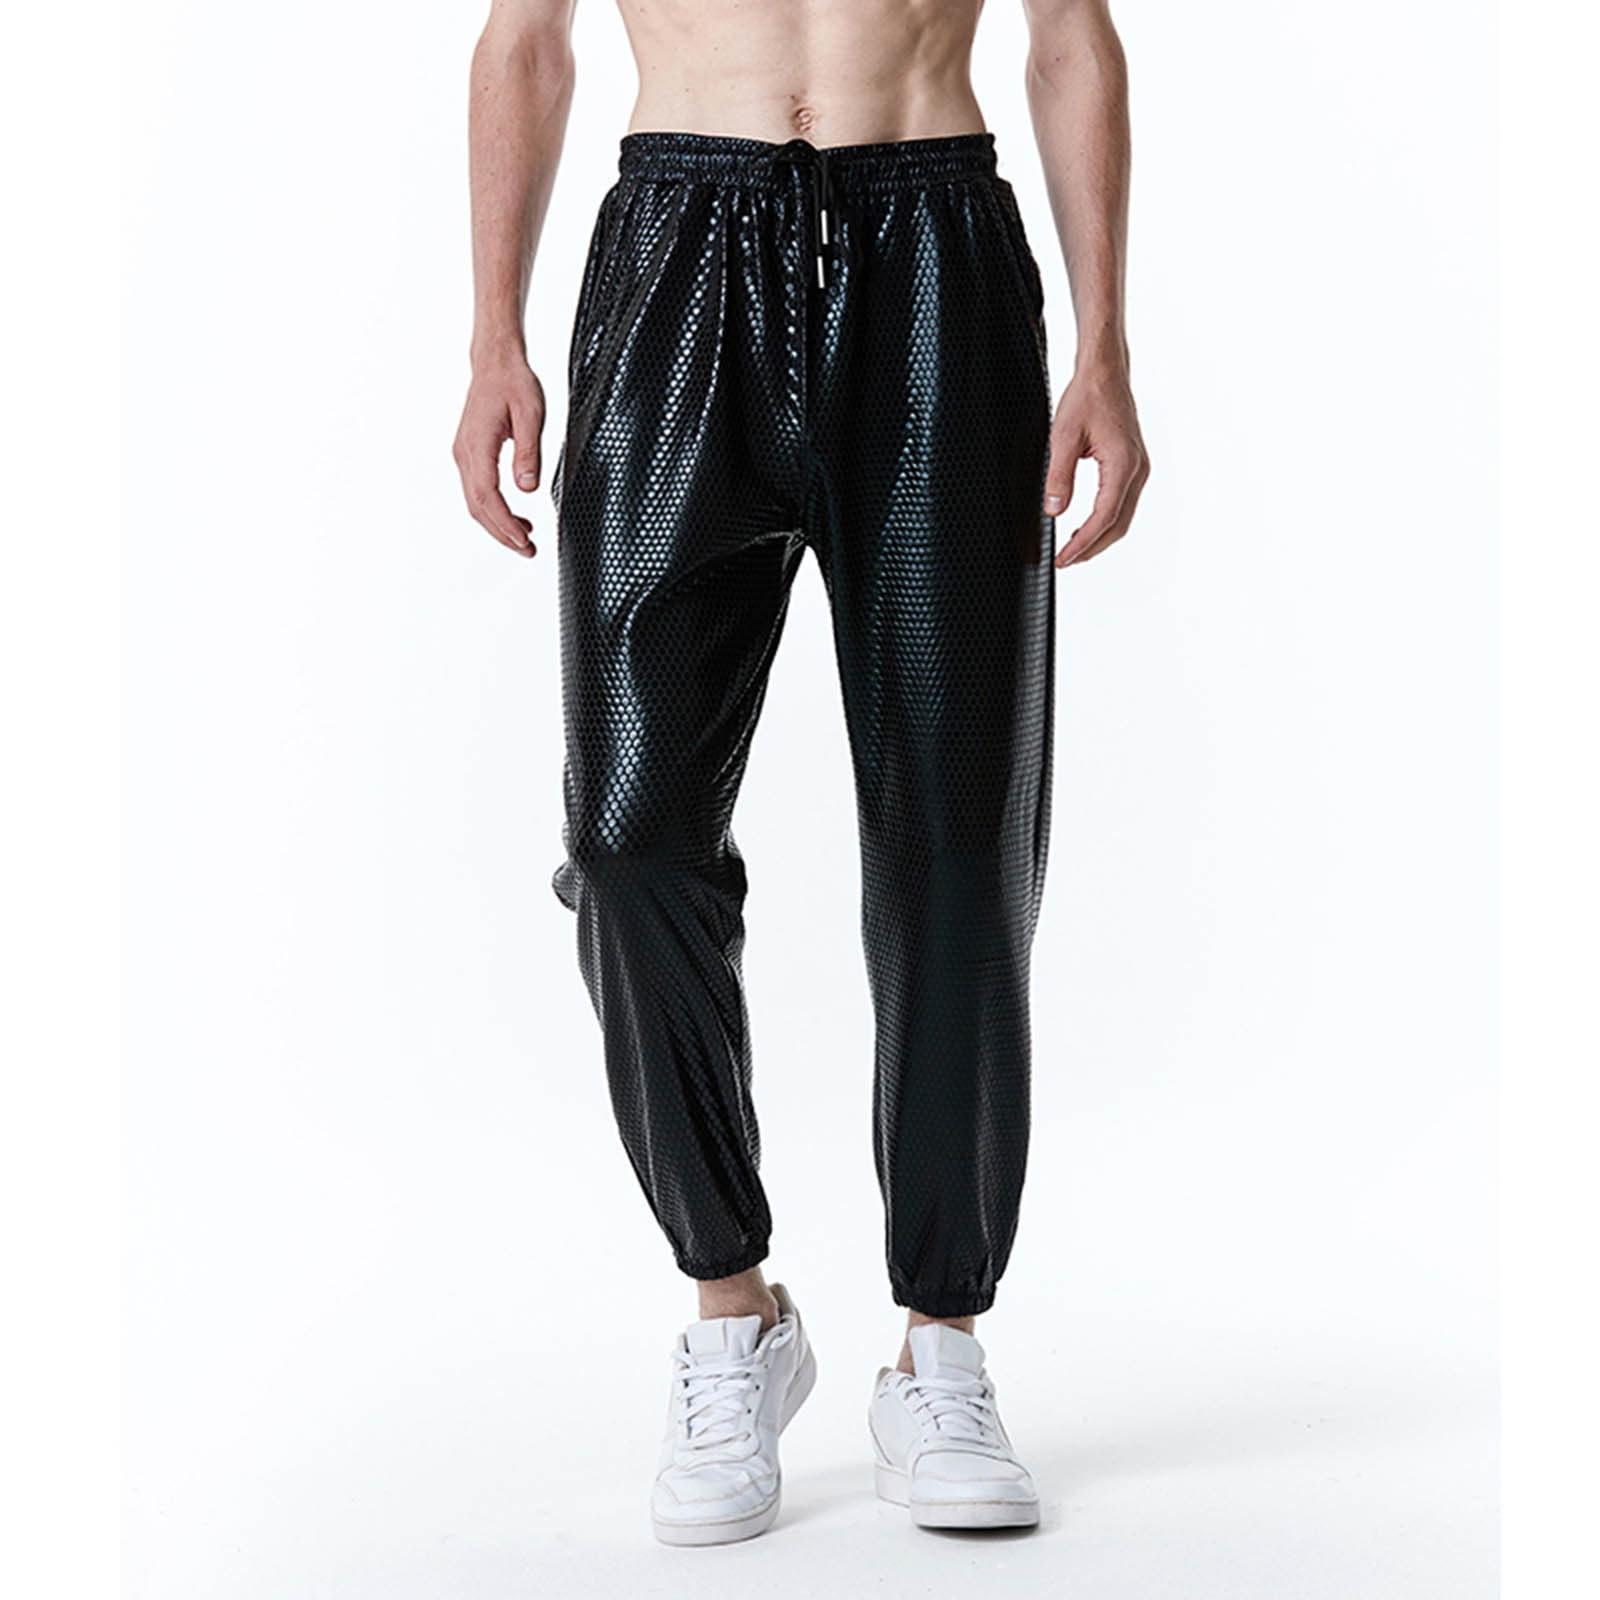 Black Cargo Pants For Men Male Casual Scale Print Pants Drawstring Pocket  Leggings Pant Trousers